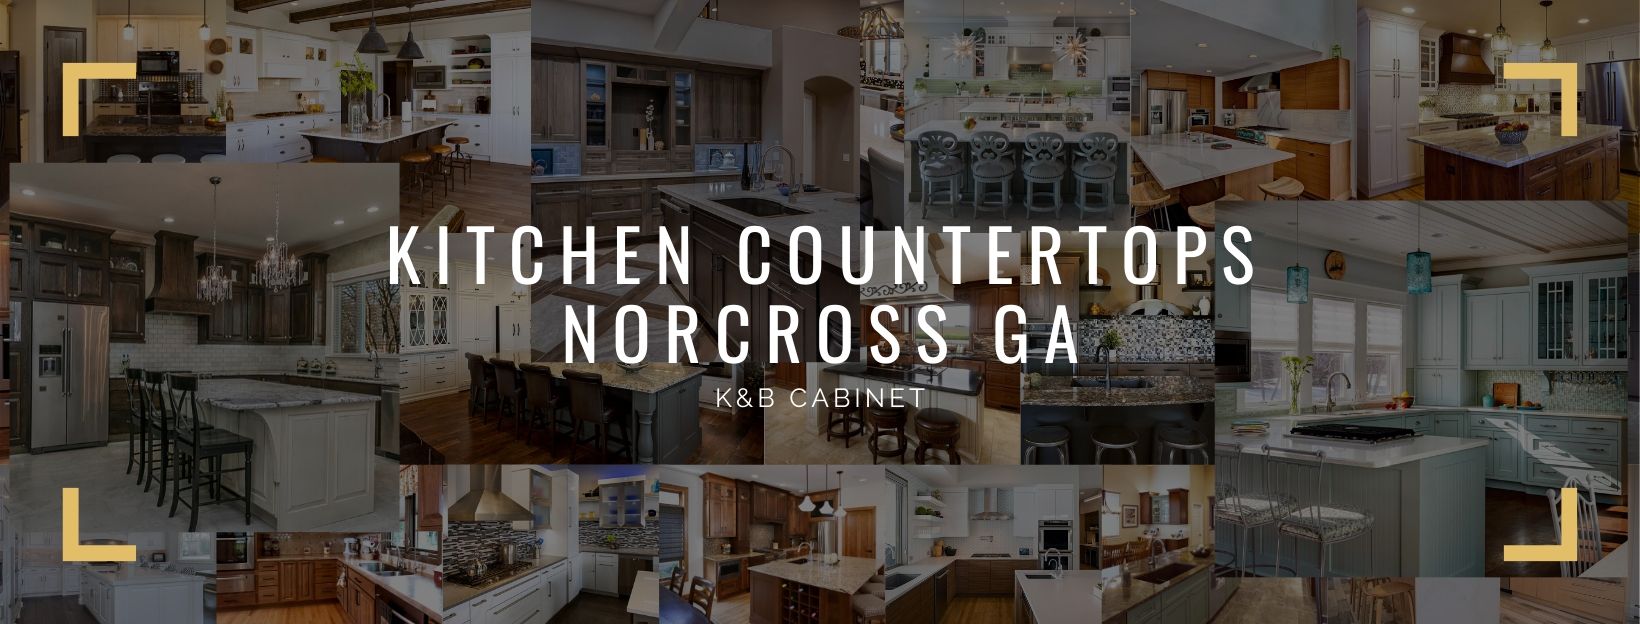 Kitchen Countertops Norcross GA